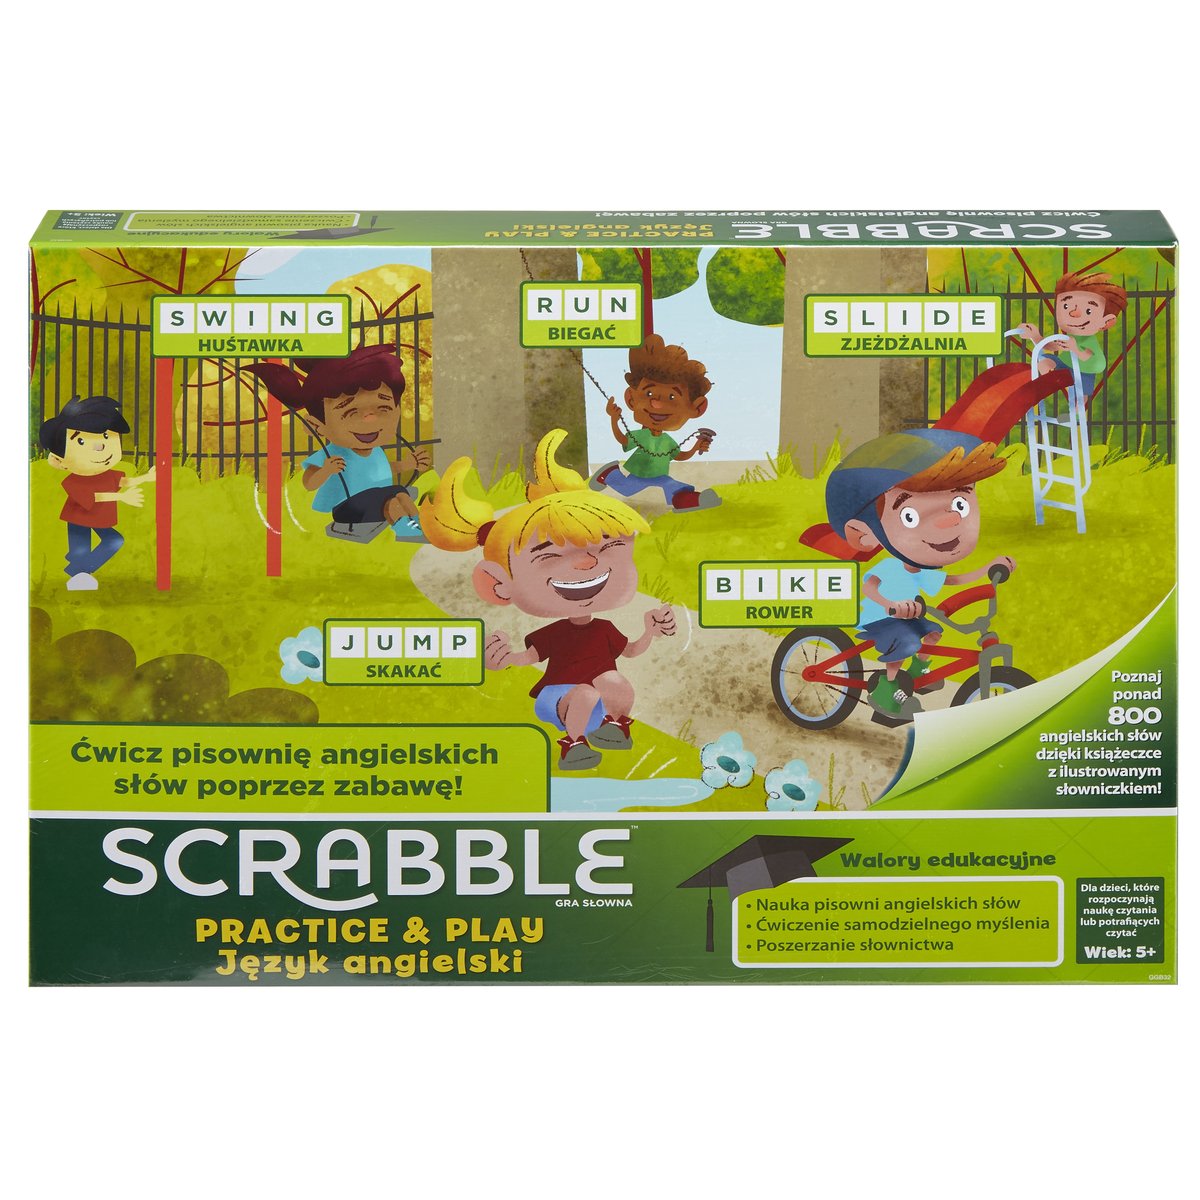 Scrabble Practice And Play, gra edukacyjna, Scrabble